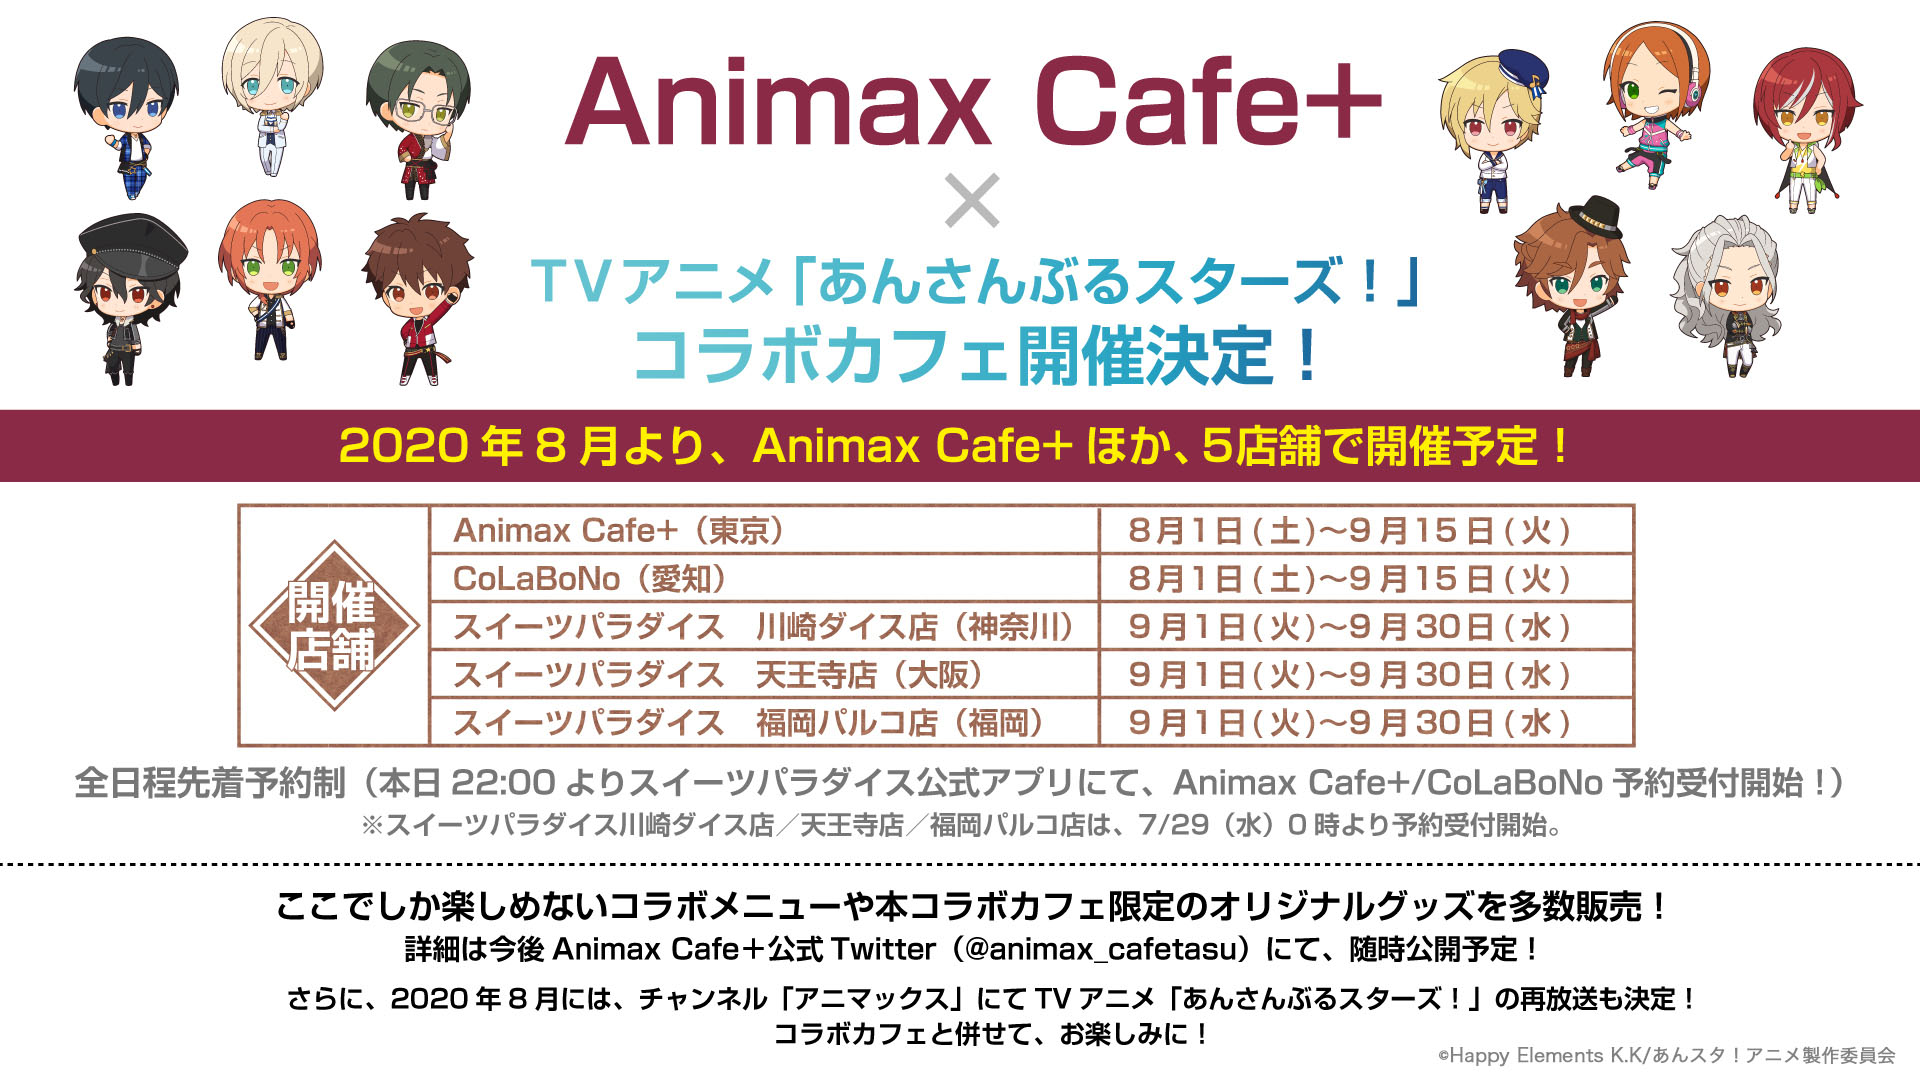 Animax Cafe+、CoLaBoNo、スイーツパラダイス にてコラボカフェ開催決定！